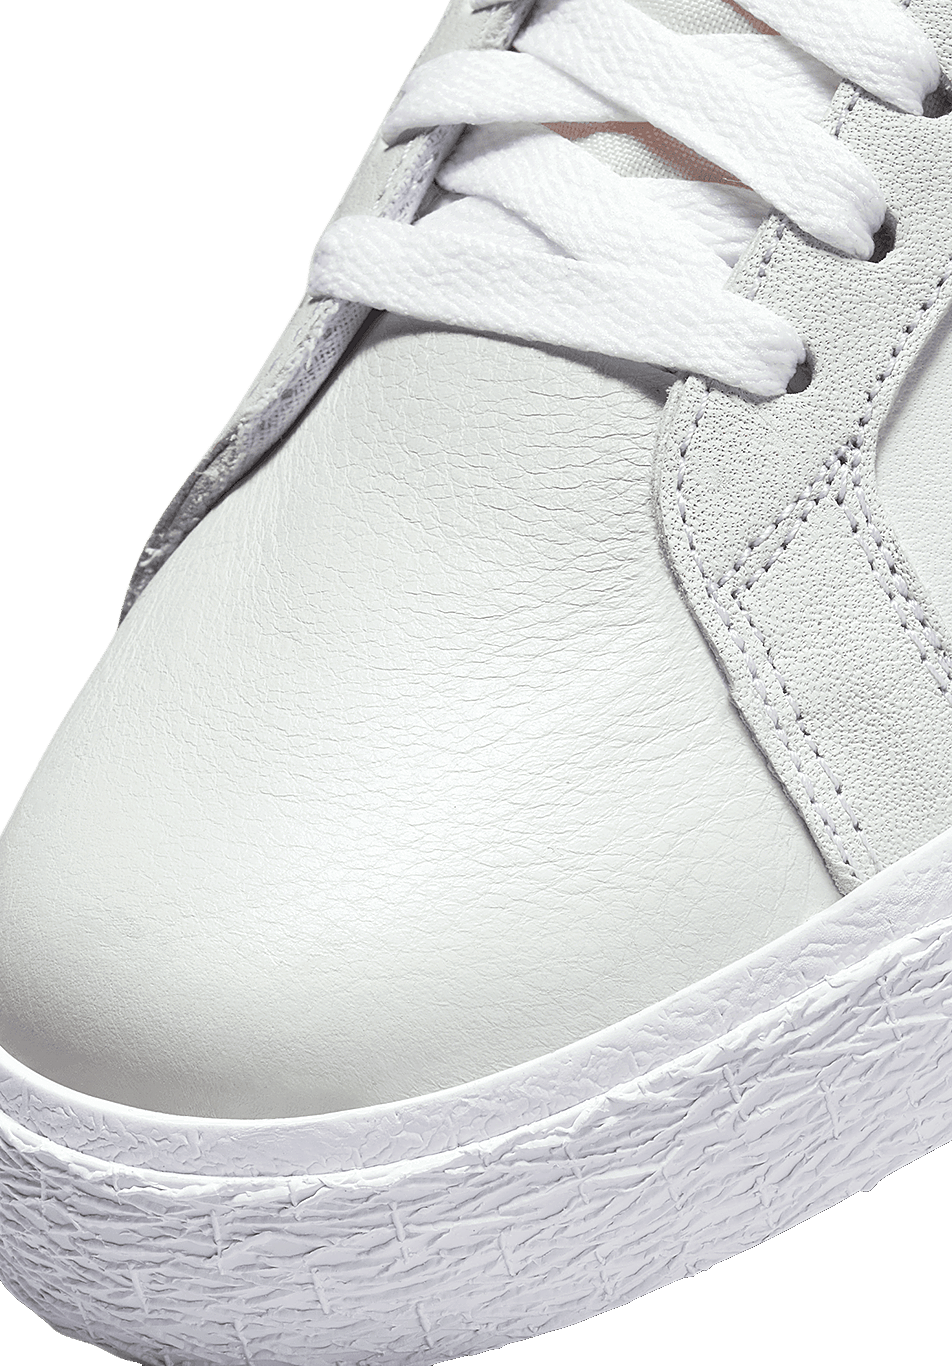 Nike SB Zoom Blazer Mid ISO Weiß Dunkelgrün 